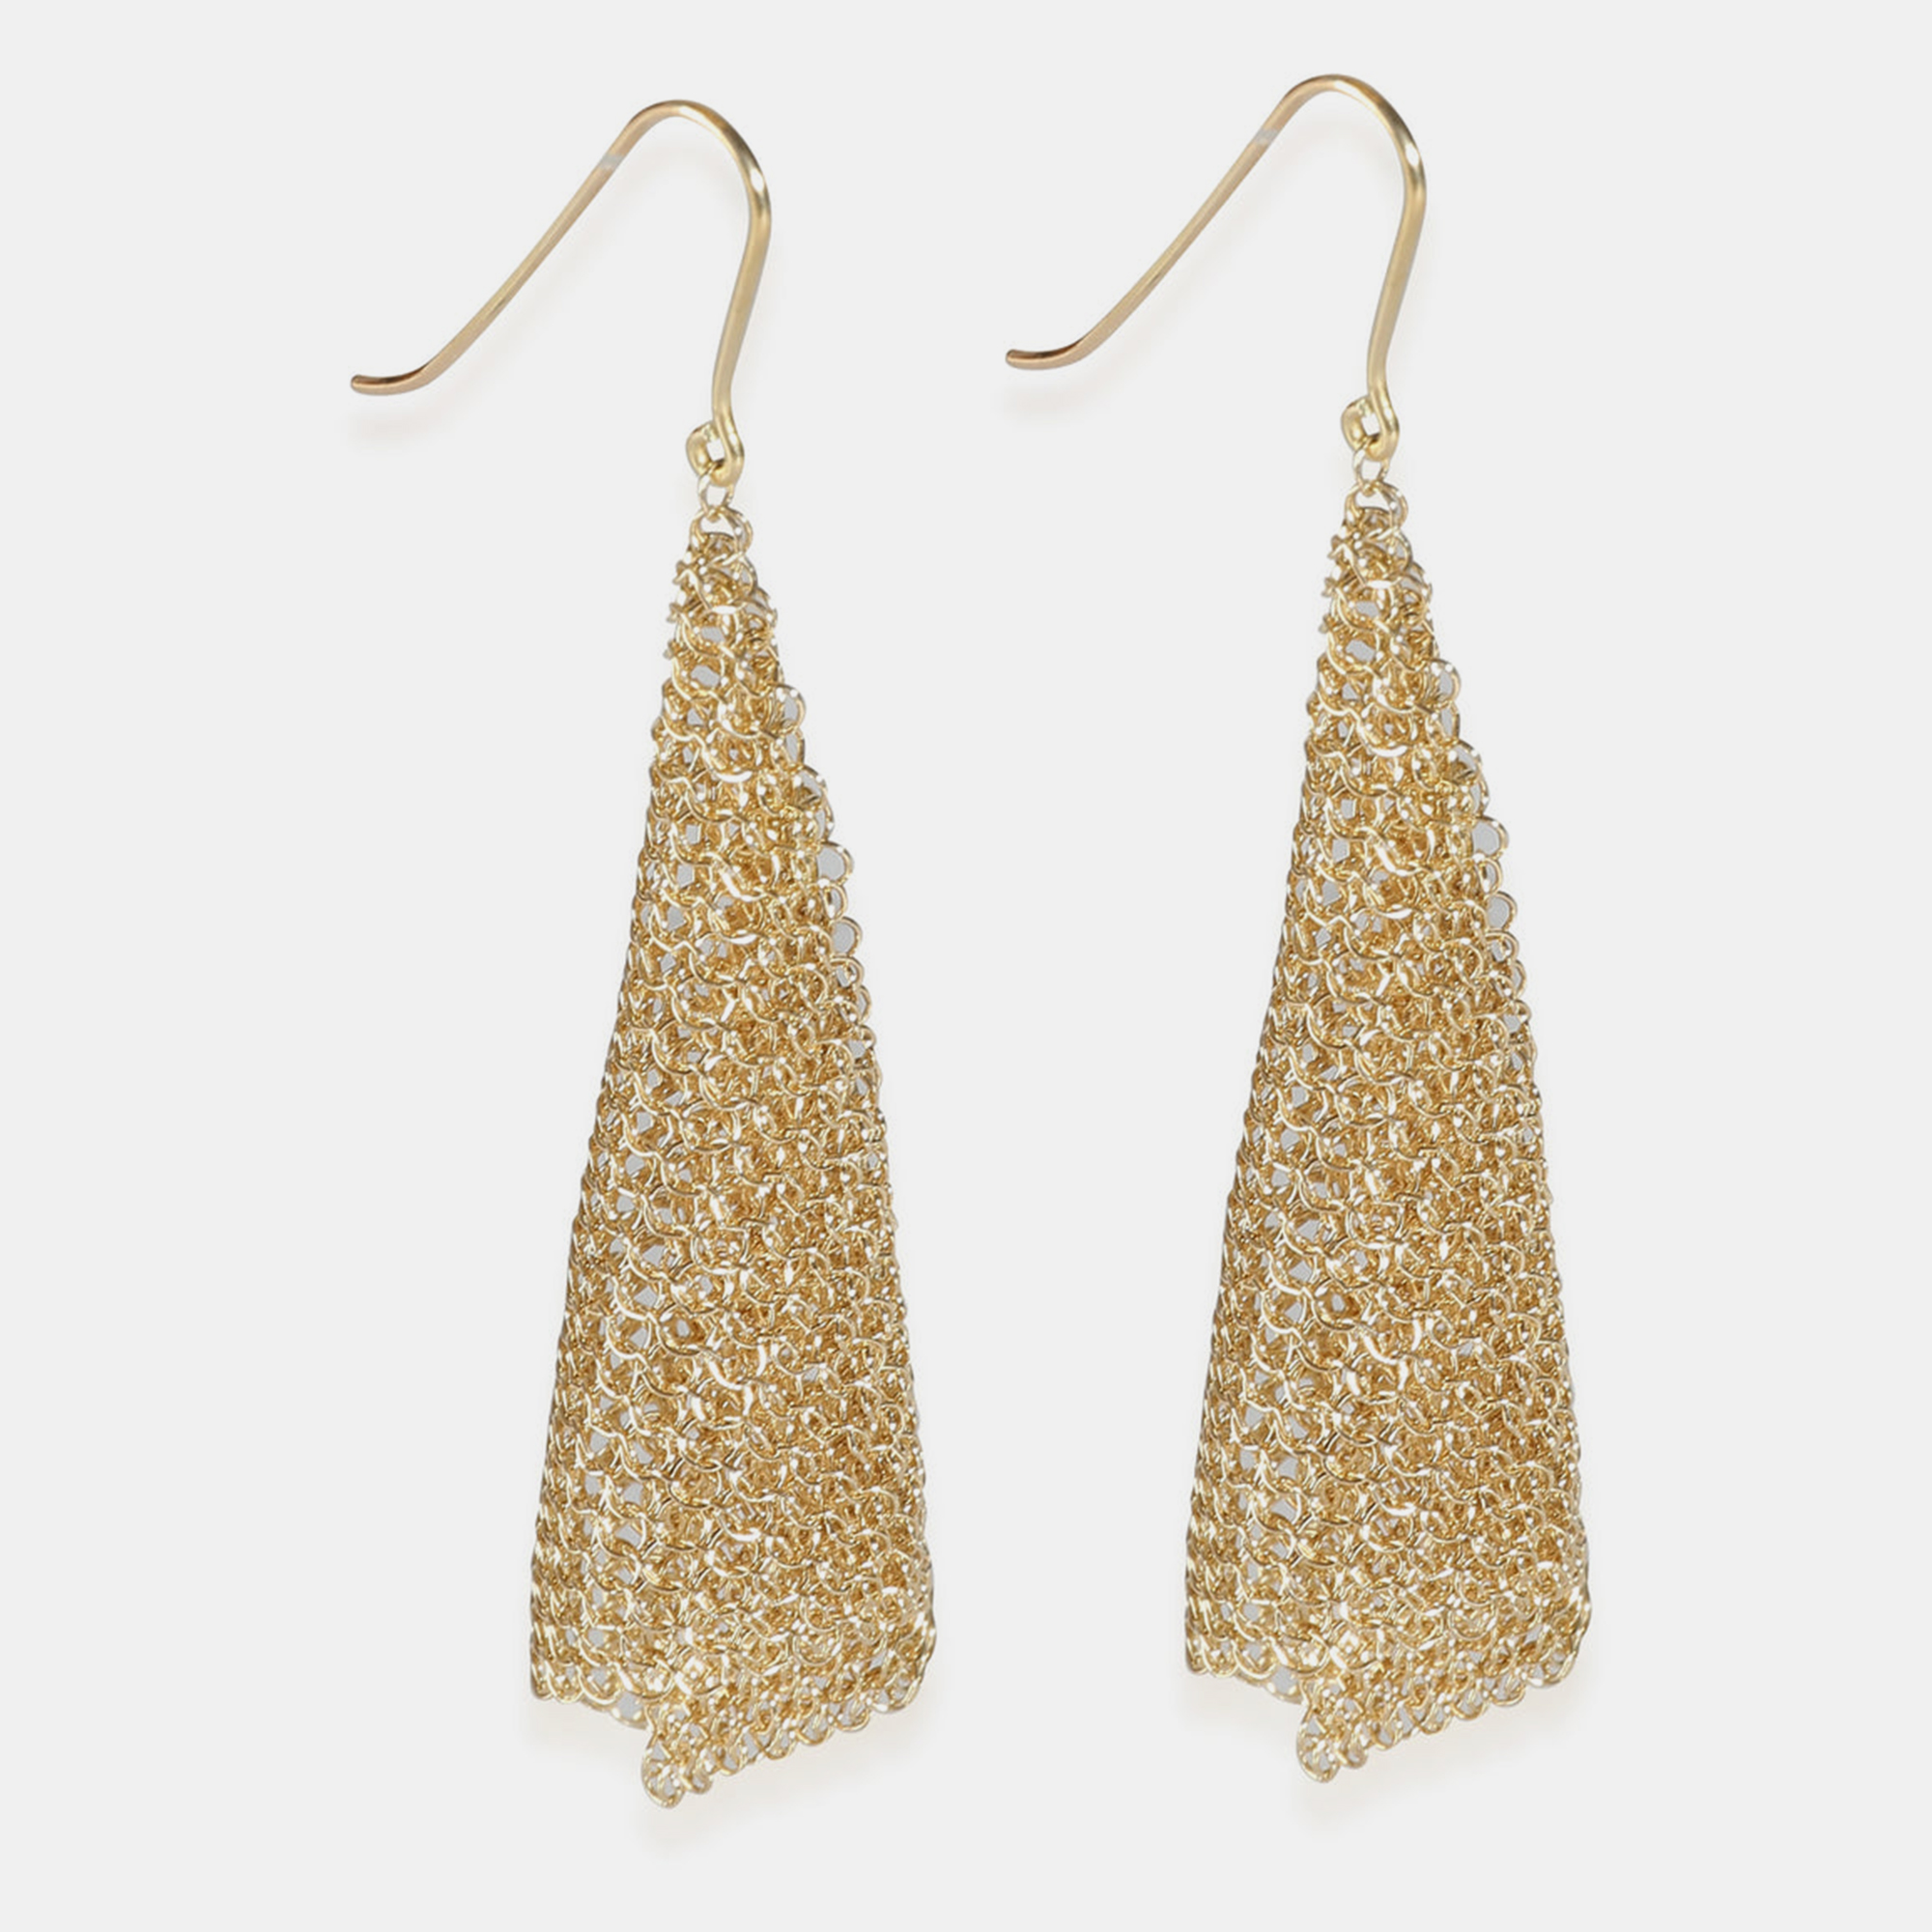 Tiffany & co. yellow gold elsa peretti mesh scarf small earrings